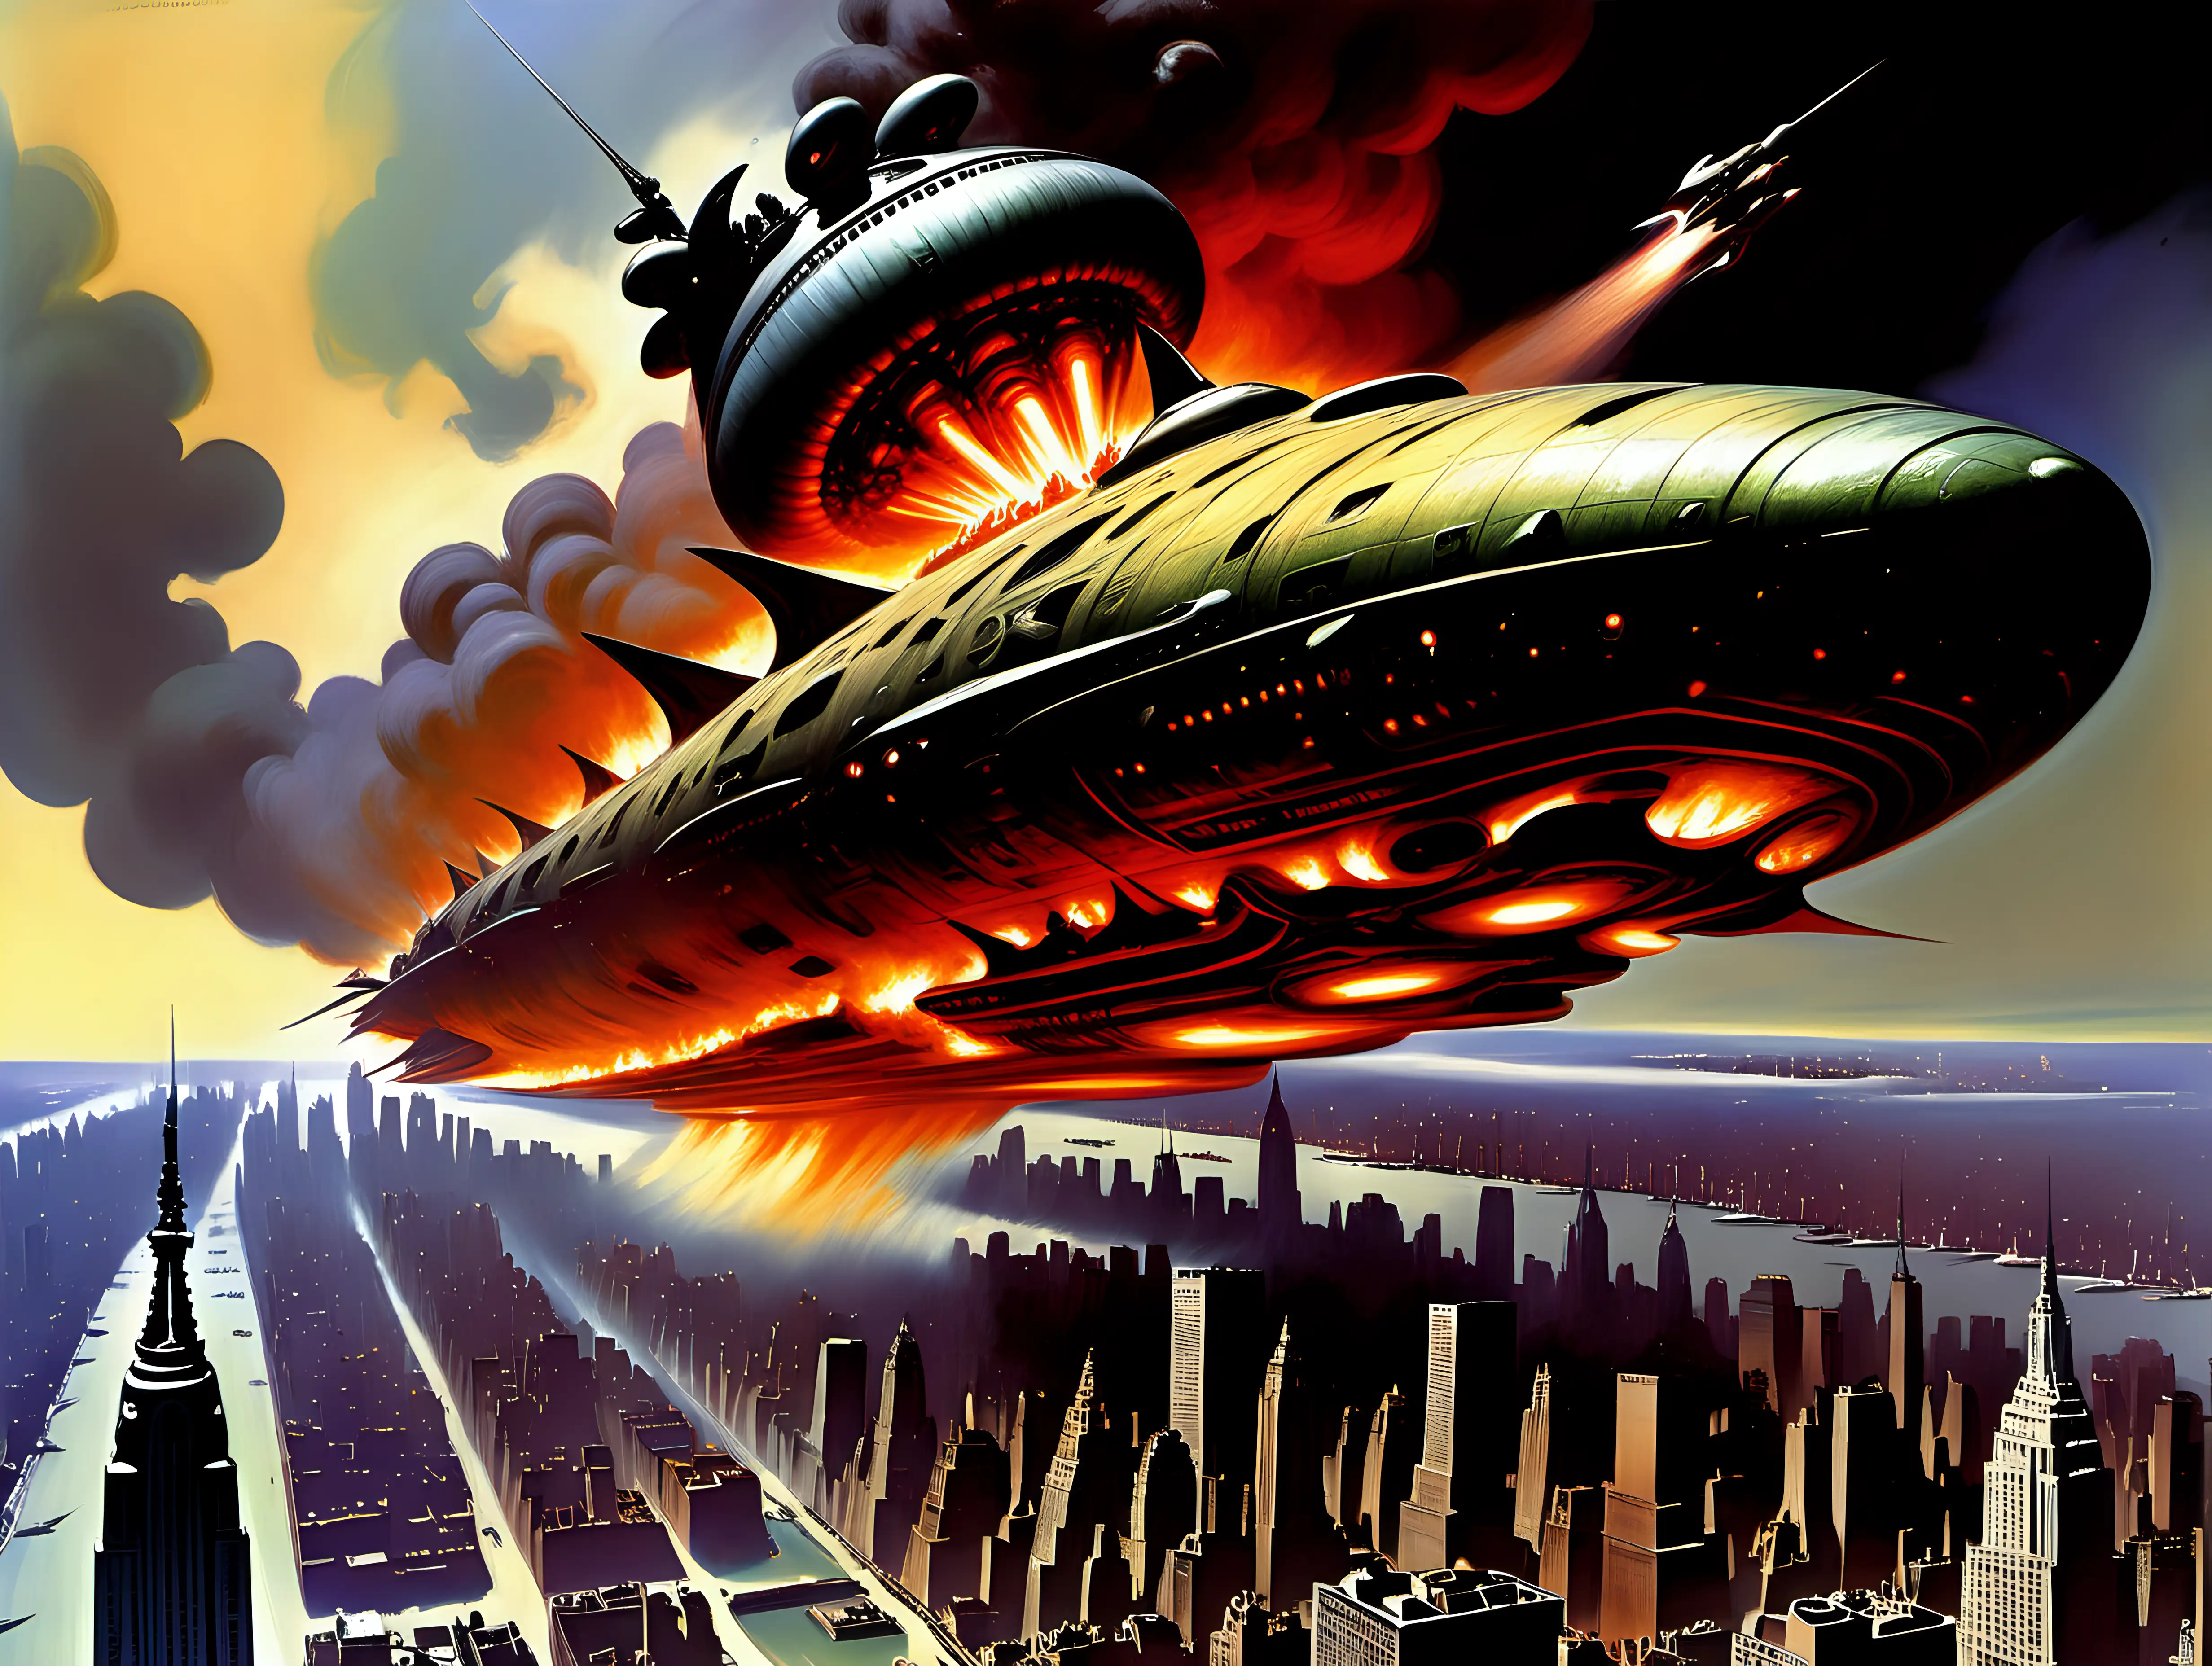 Alien Spacecraft Attack on NYC Fiery Chaos in 1940 Frank Frazetta Style